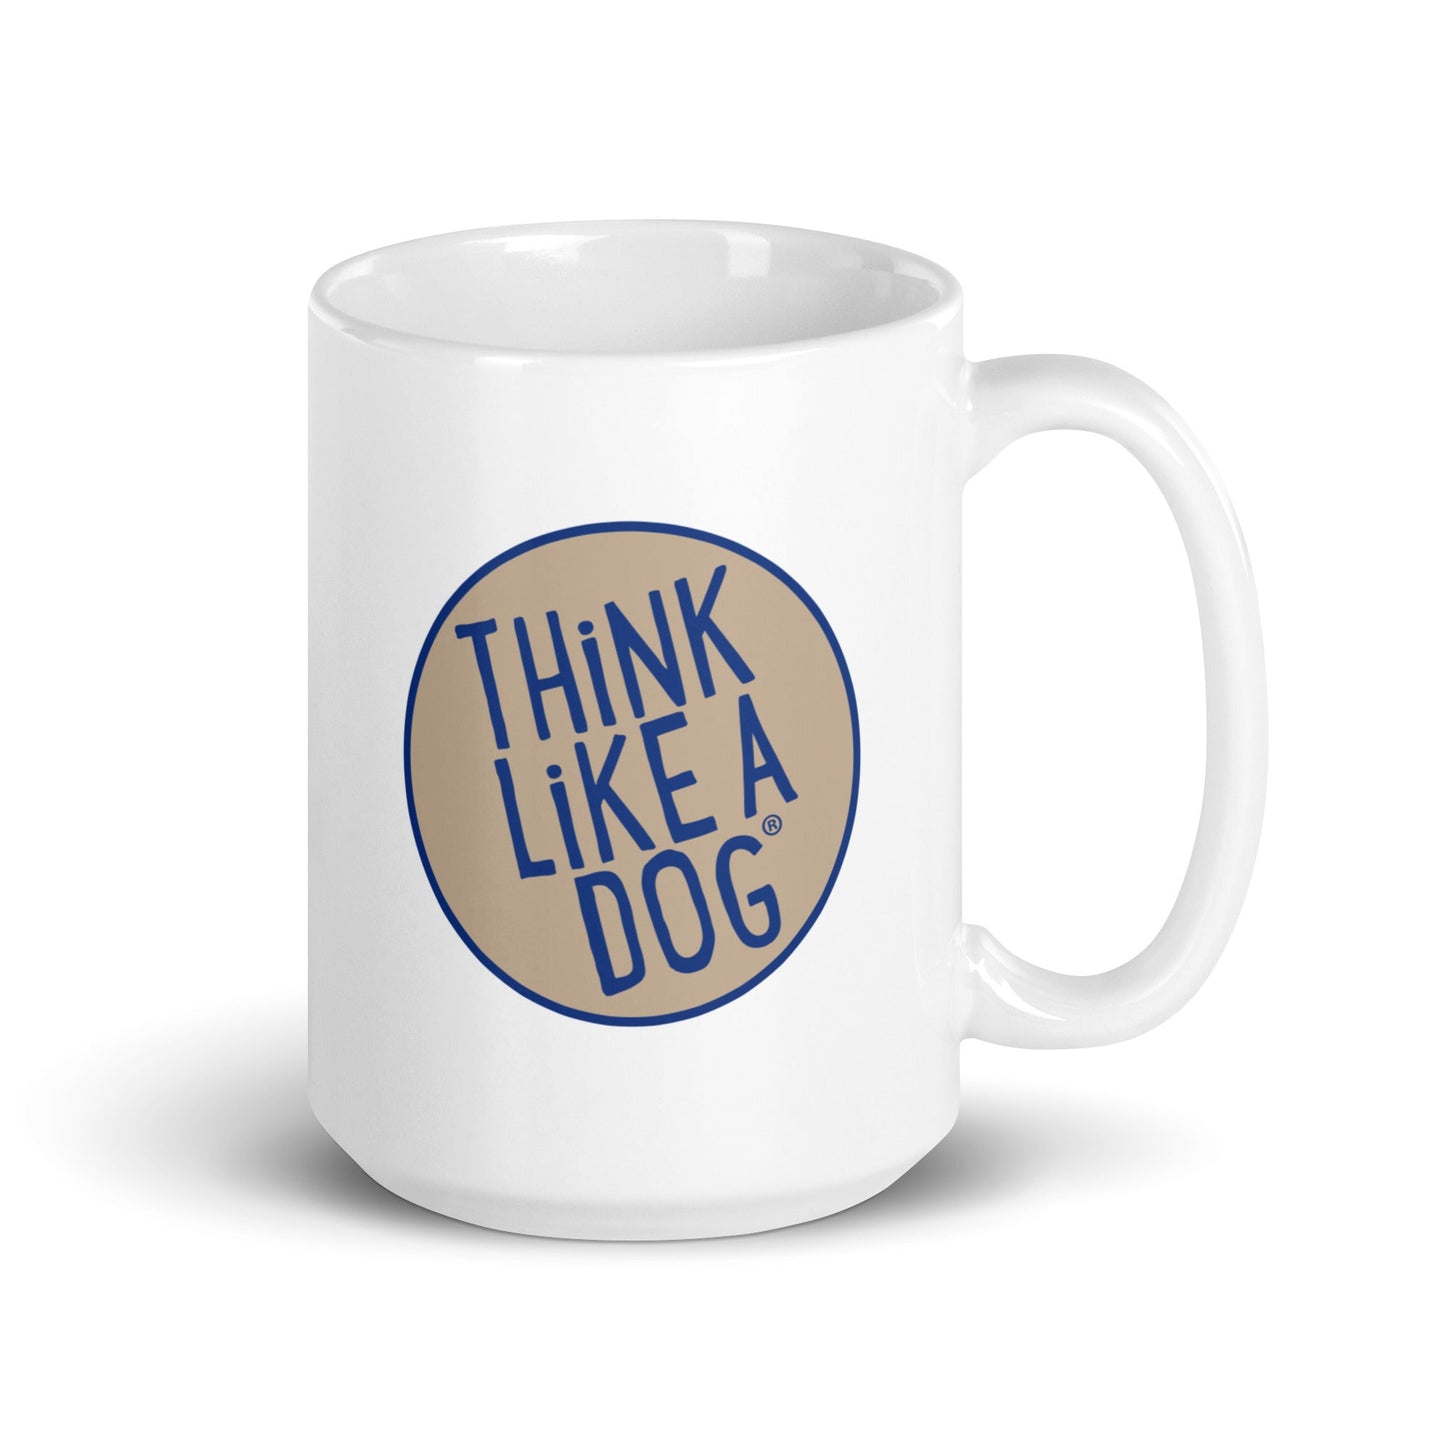 THiNK LiKE A DOG® Blue & Tan Colorway Logo on White Glossy Mug for Dog Lovers.